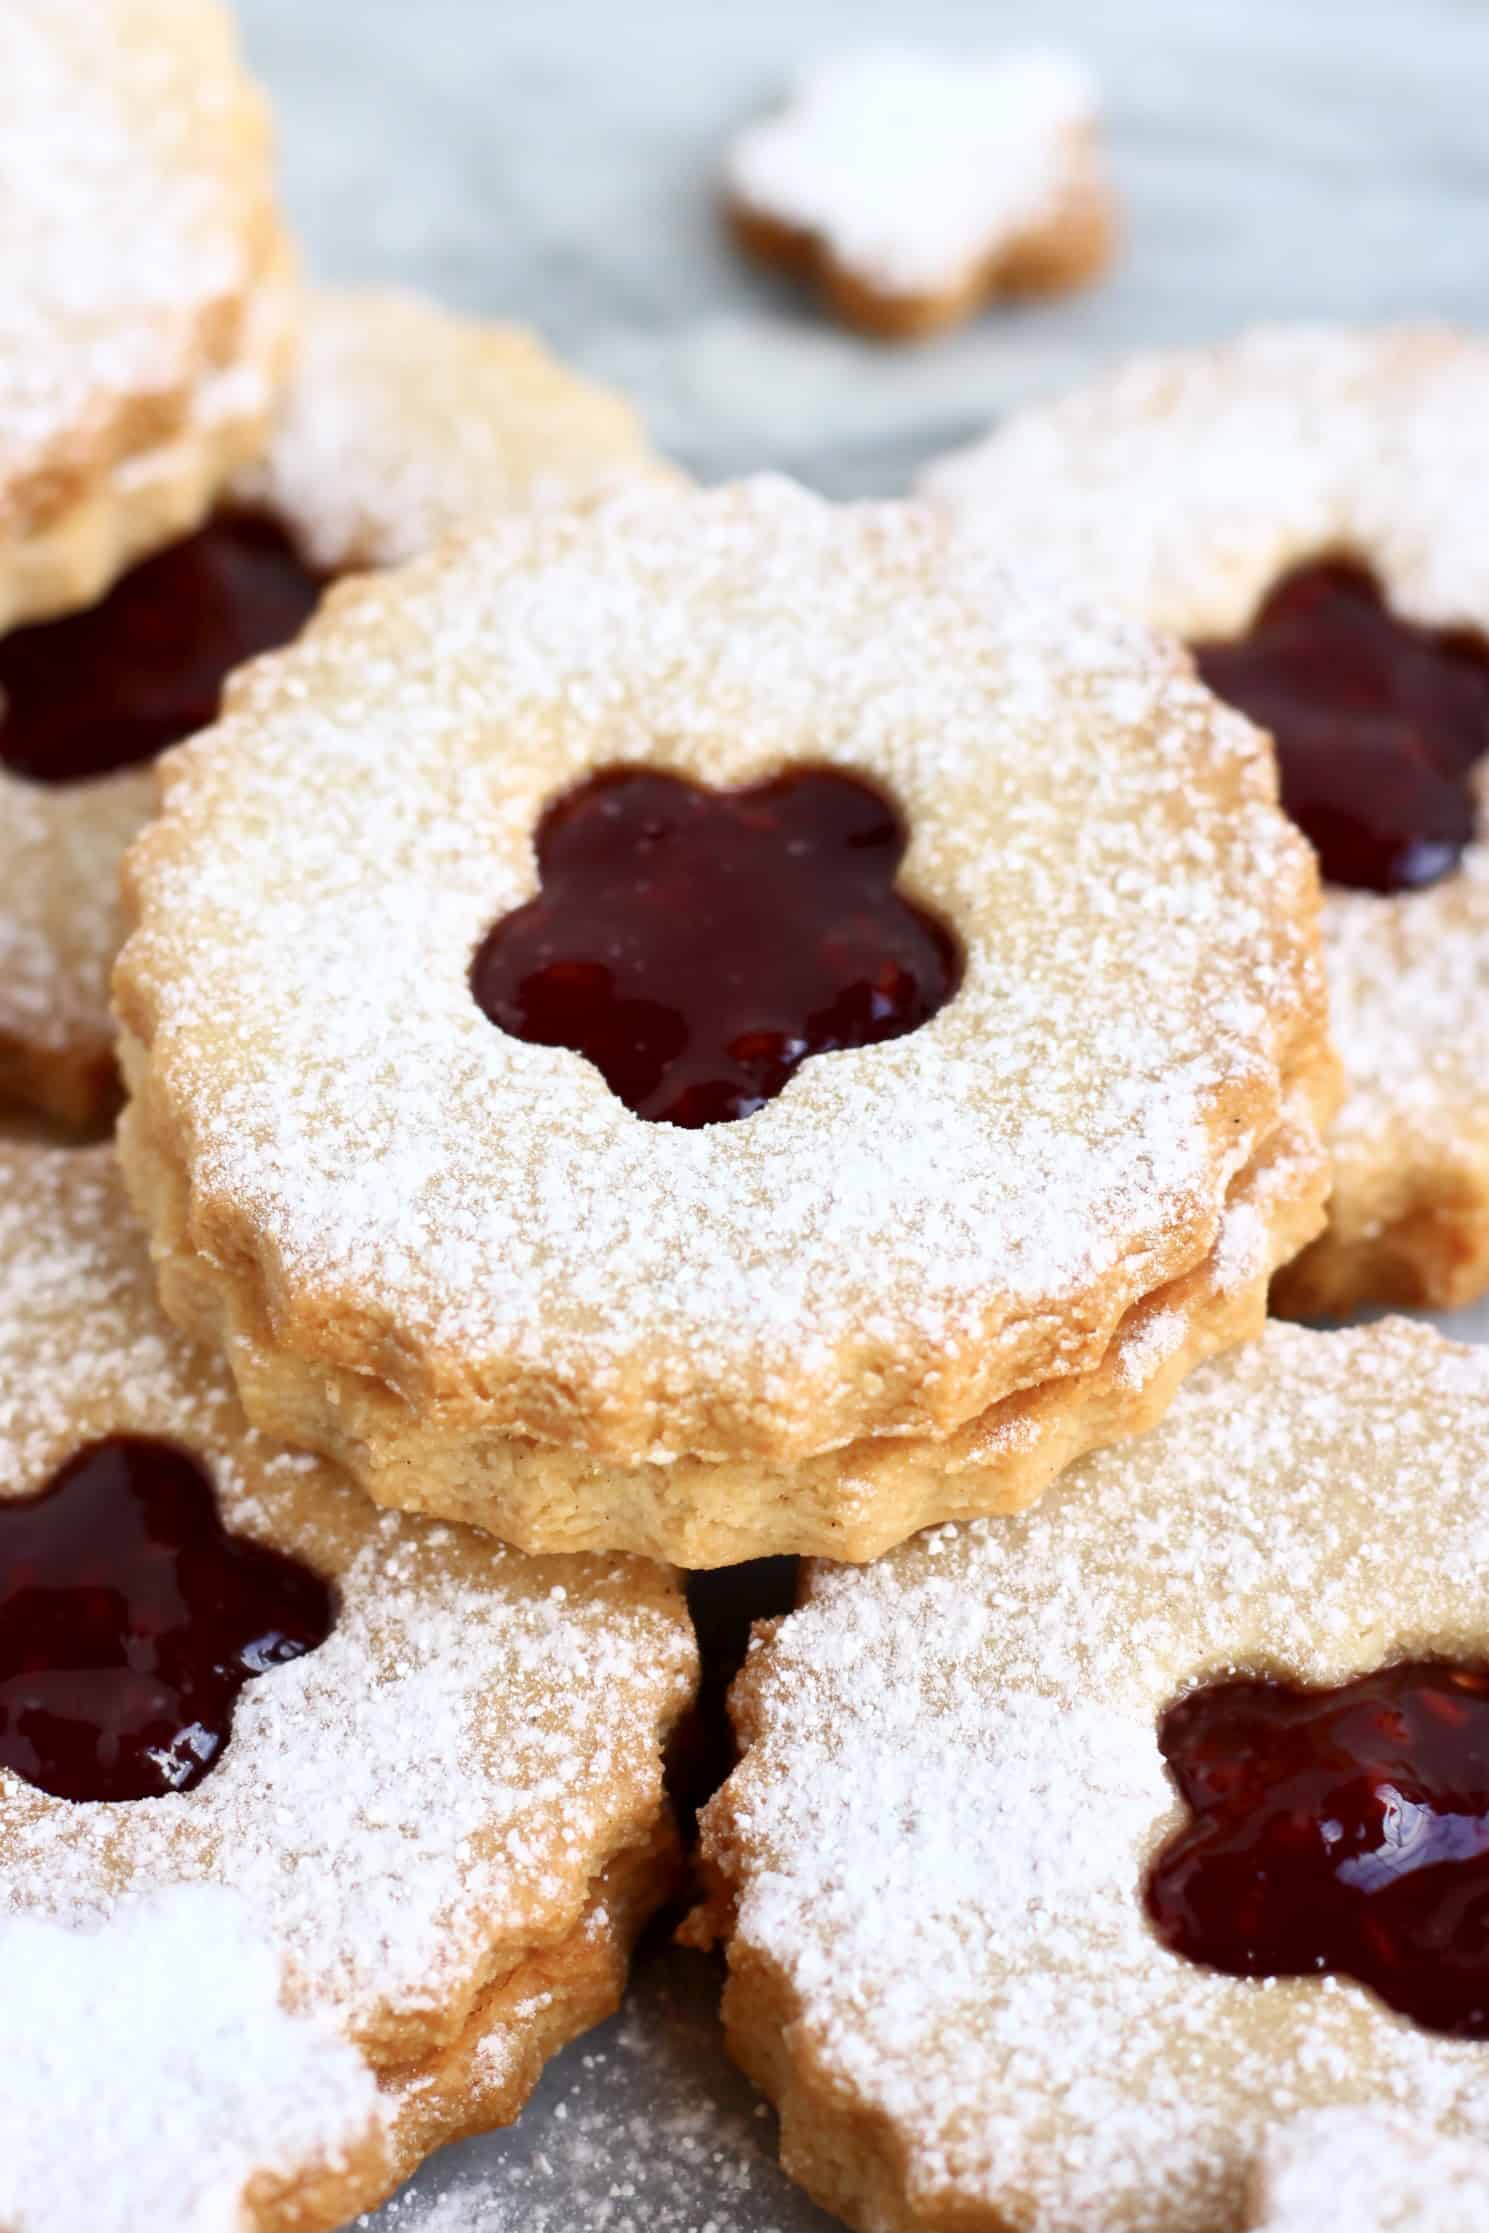 Seven gluten-free vegan linzer cookies filled with raspberry jam